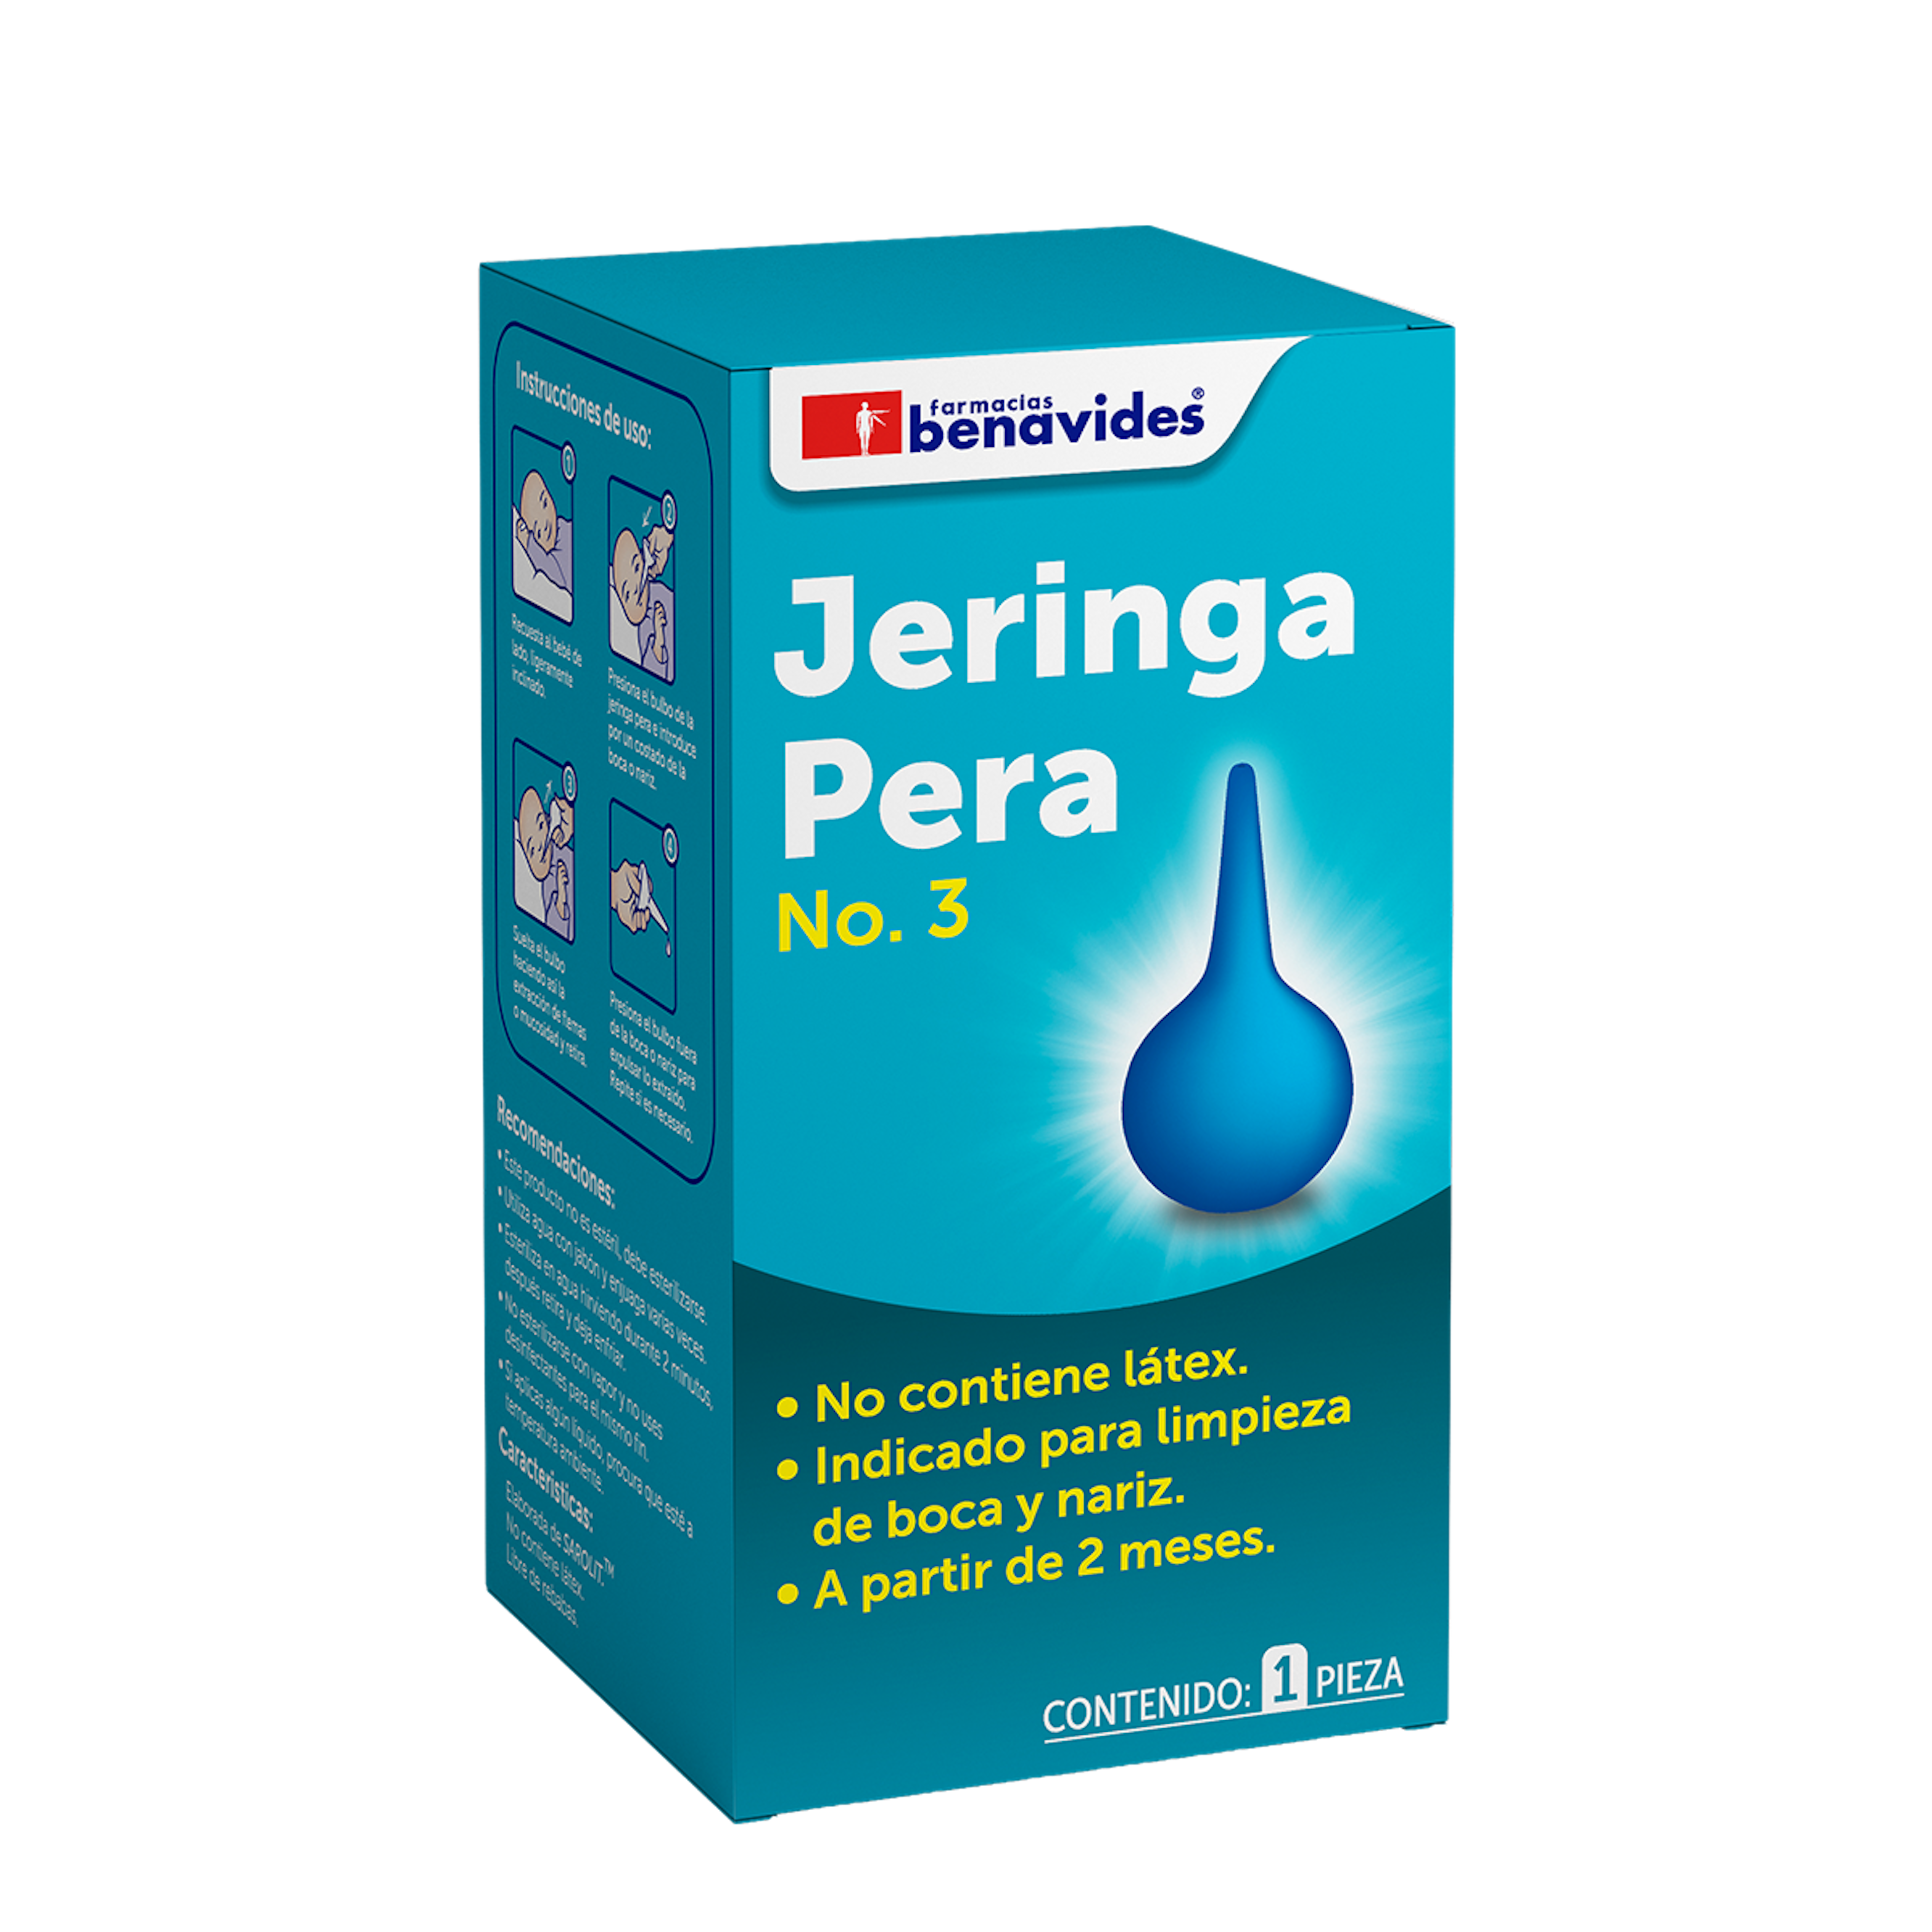 Jeringa Pera No3